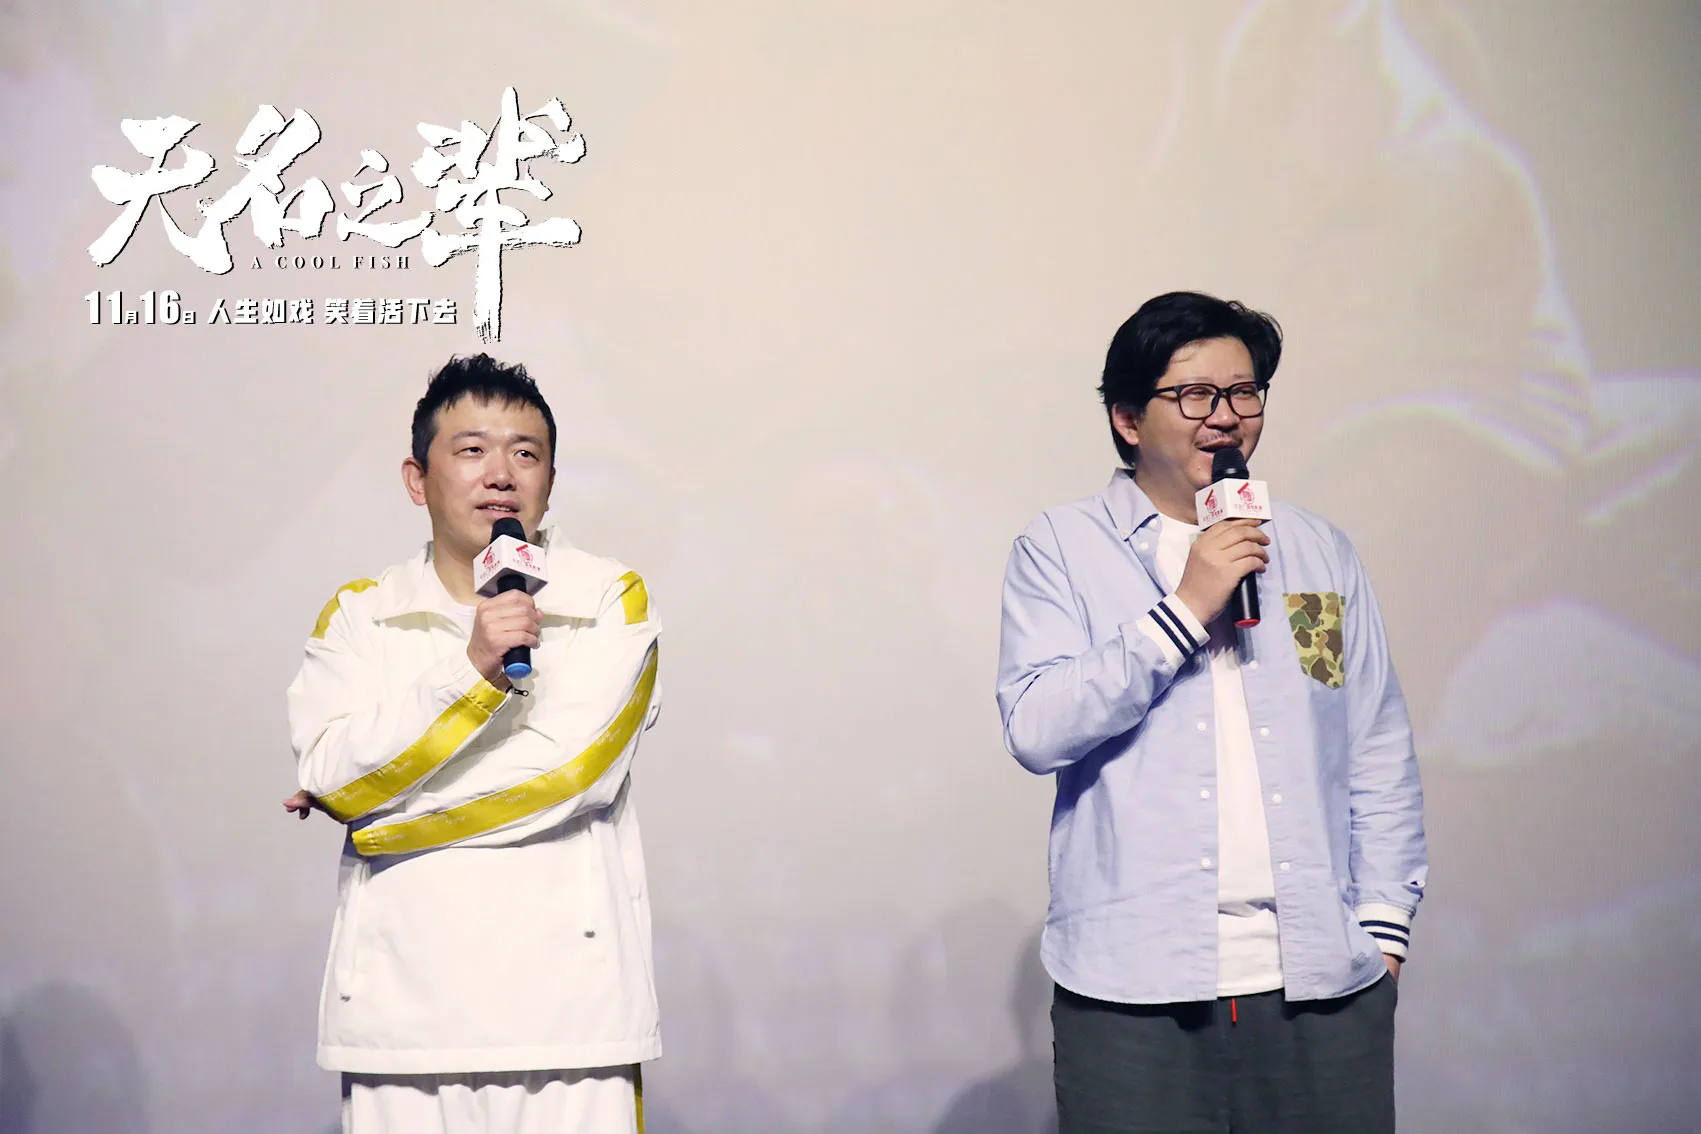 Director and Binlong Pan interact harmoniously with viewers. JPG